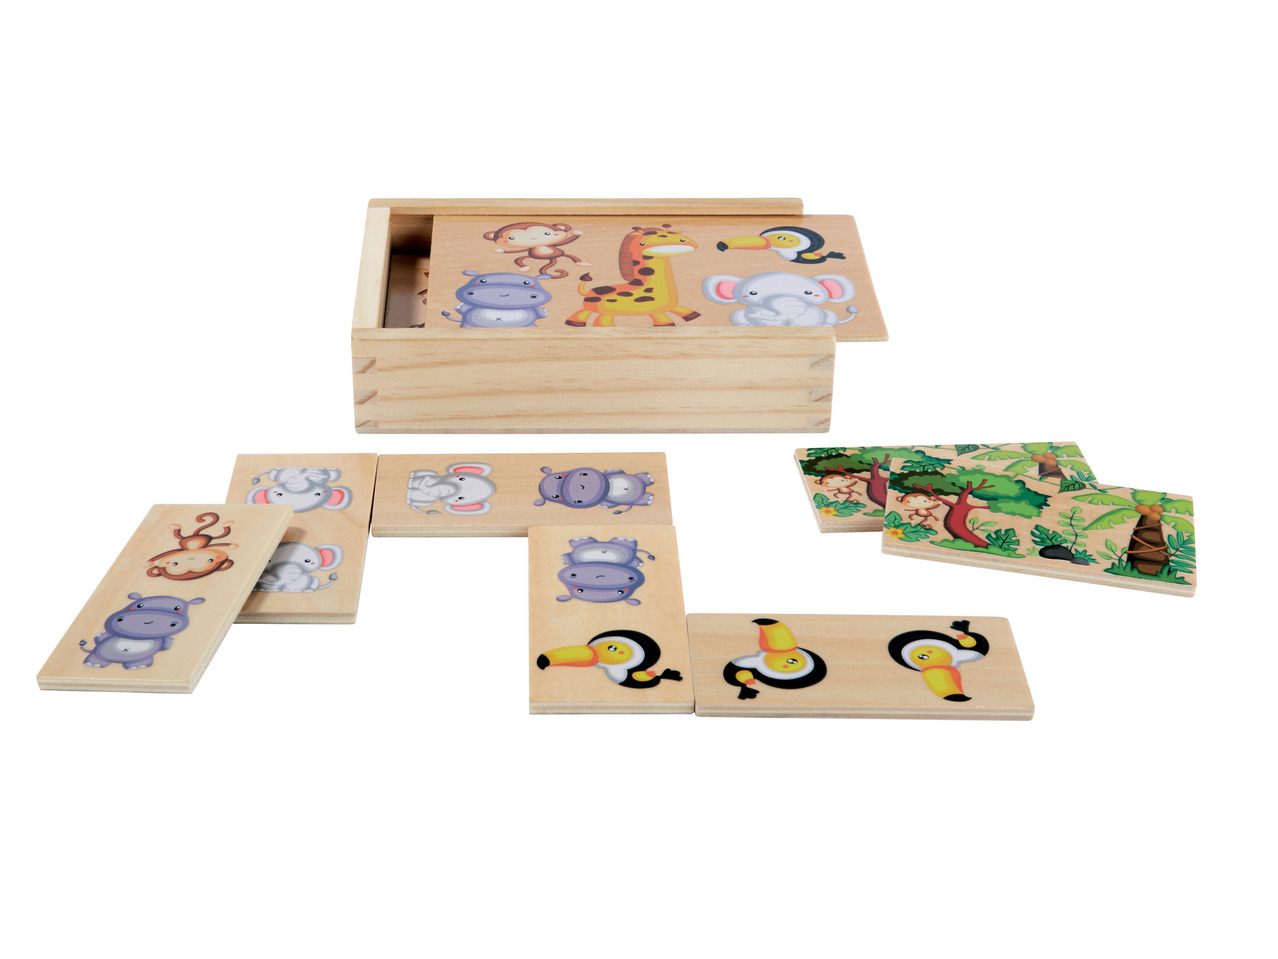 PLAYTIVE JUNIOR Wooden Game Sets